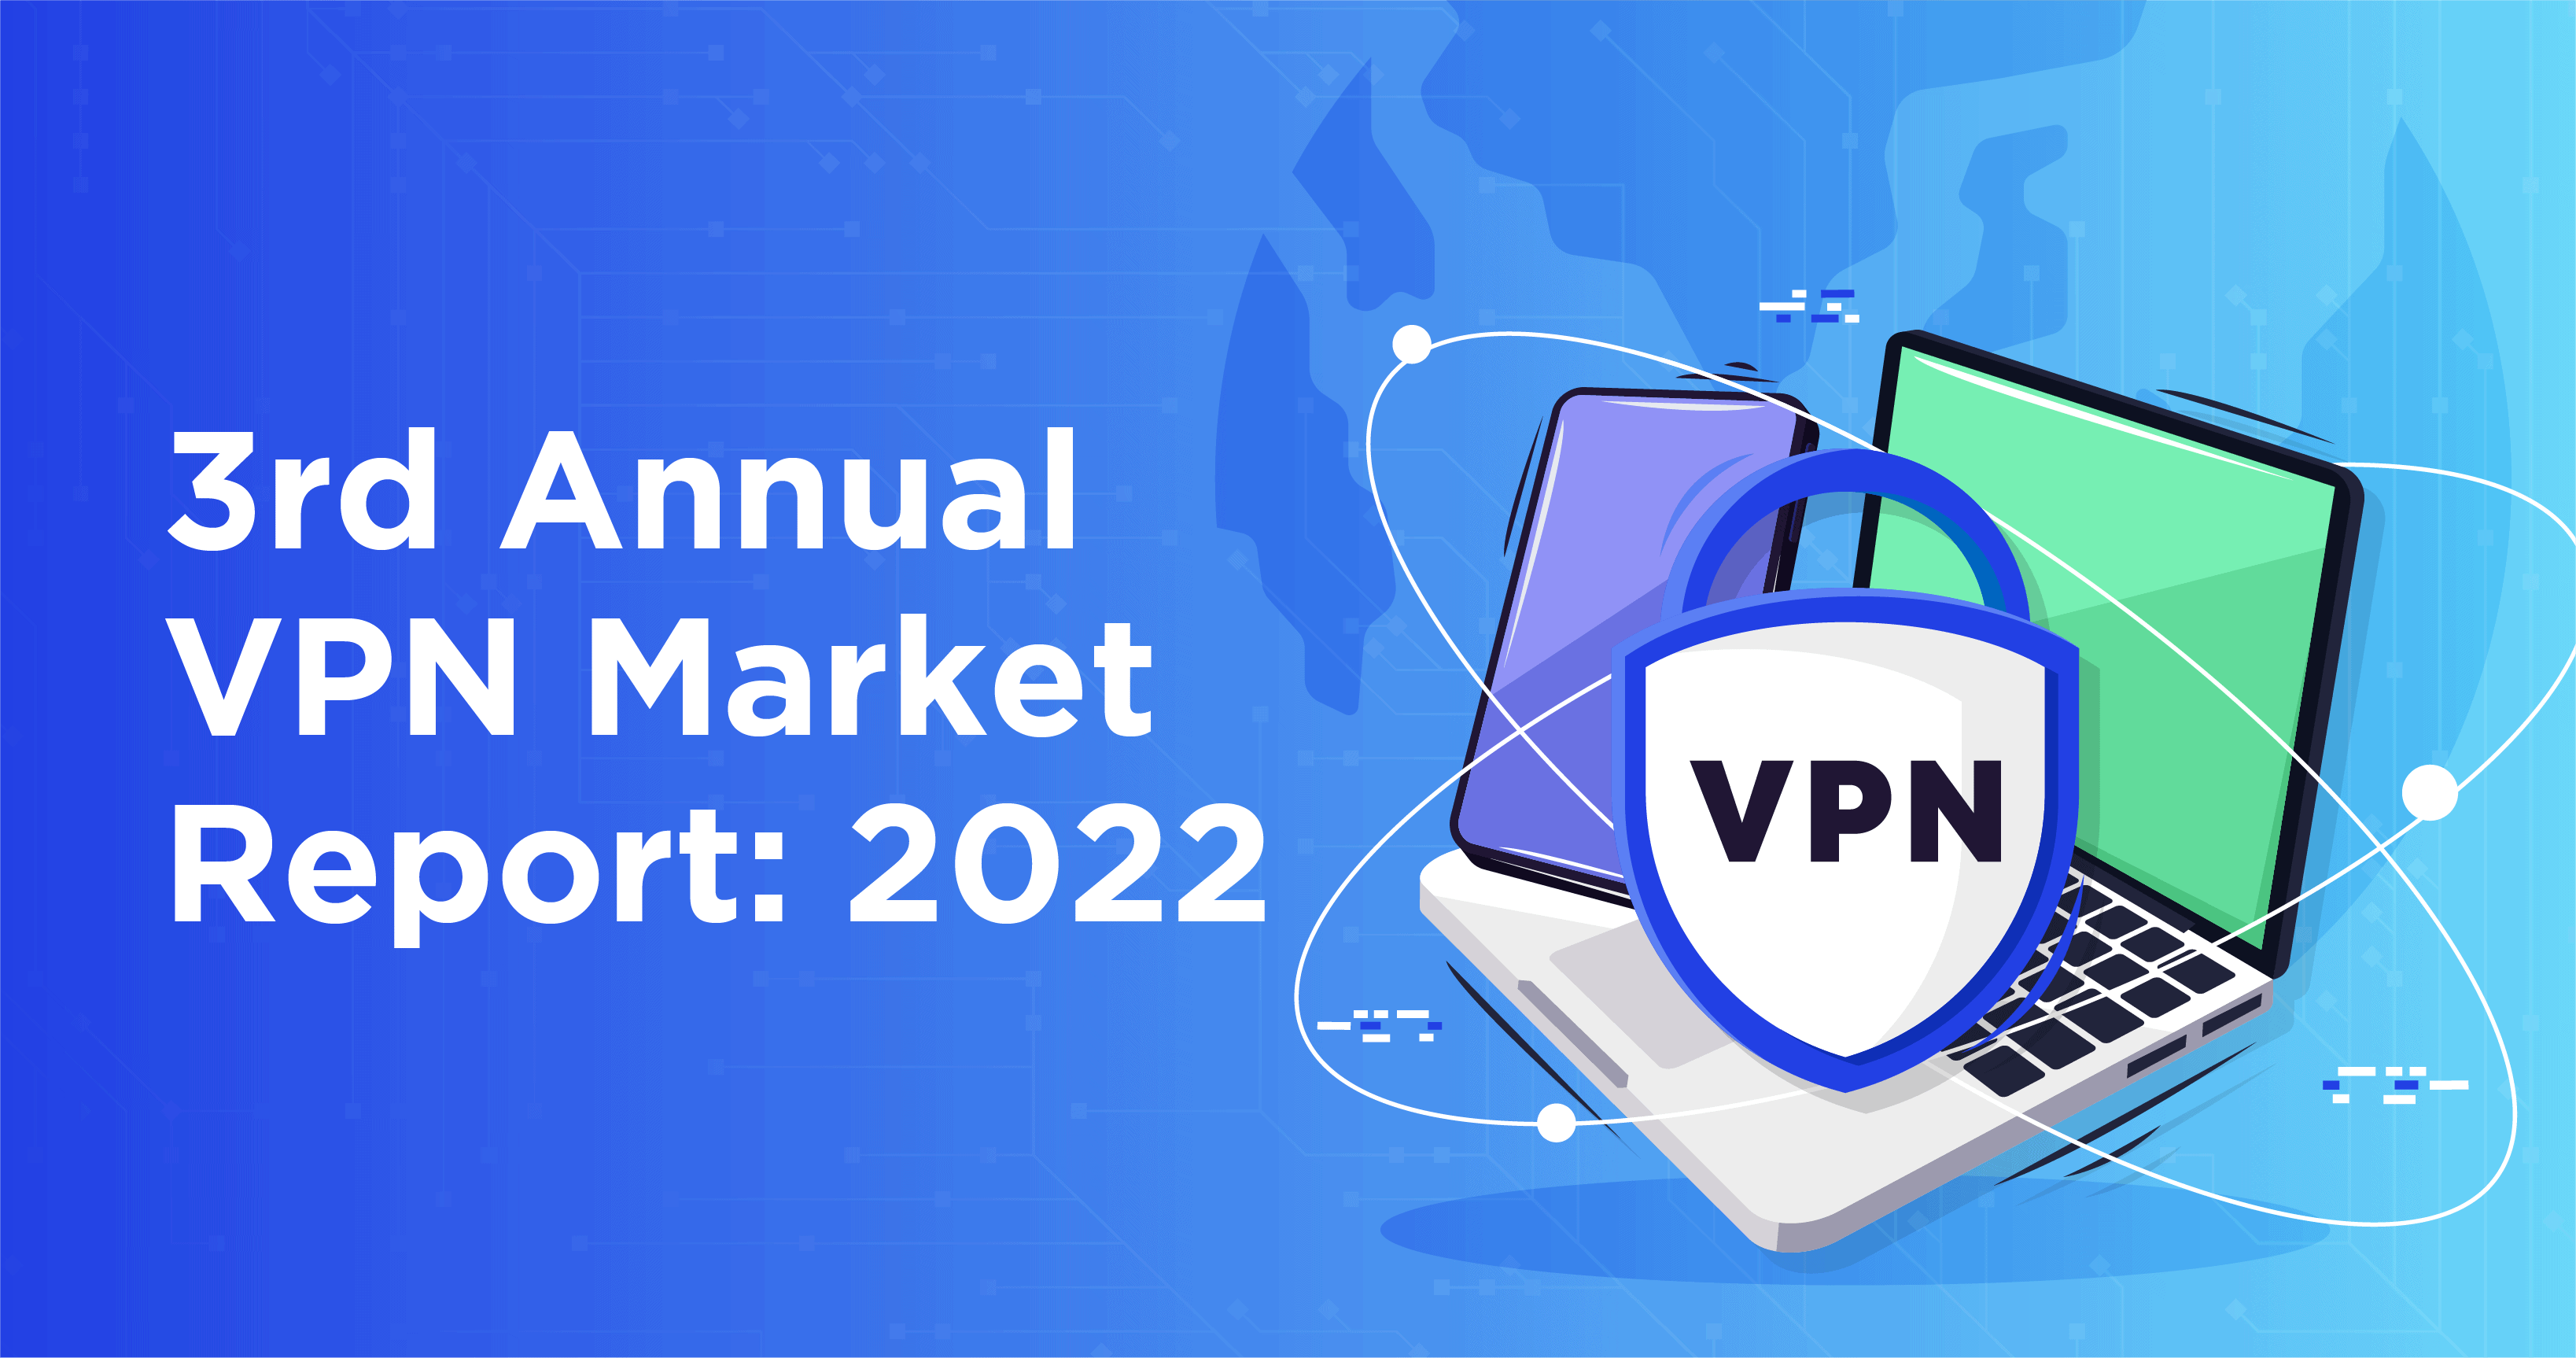 3rd Annual VPN Market Report: 2022